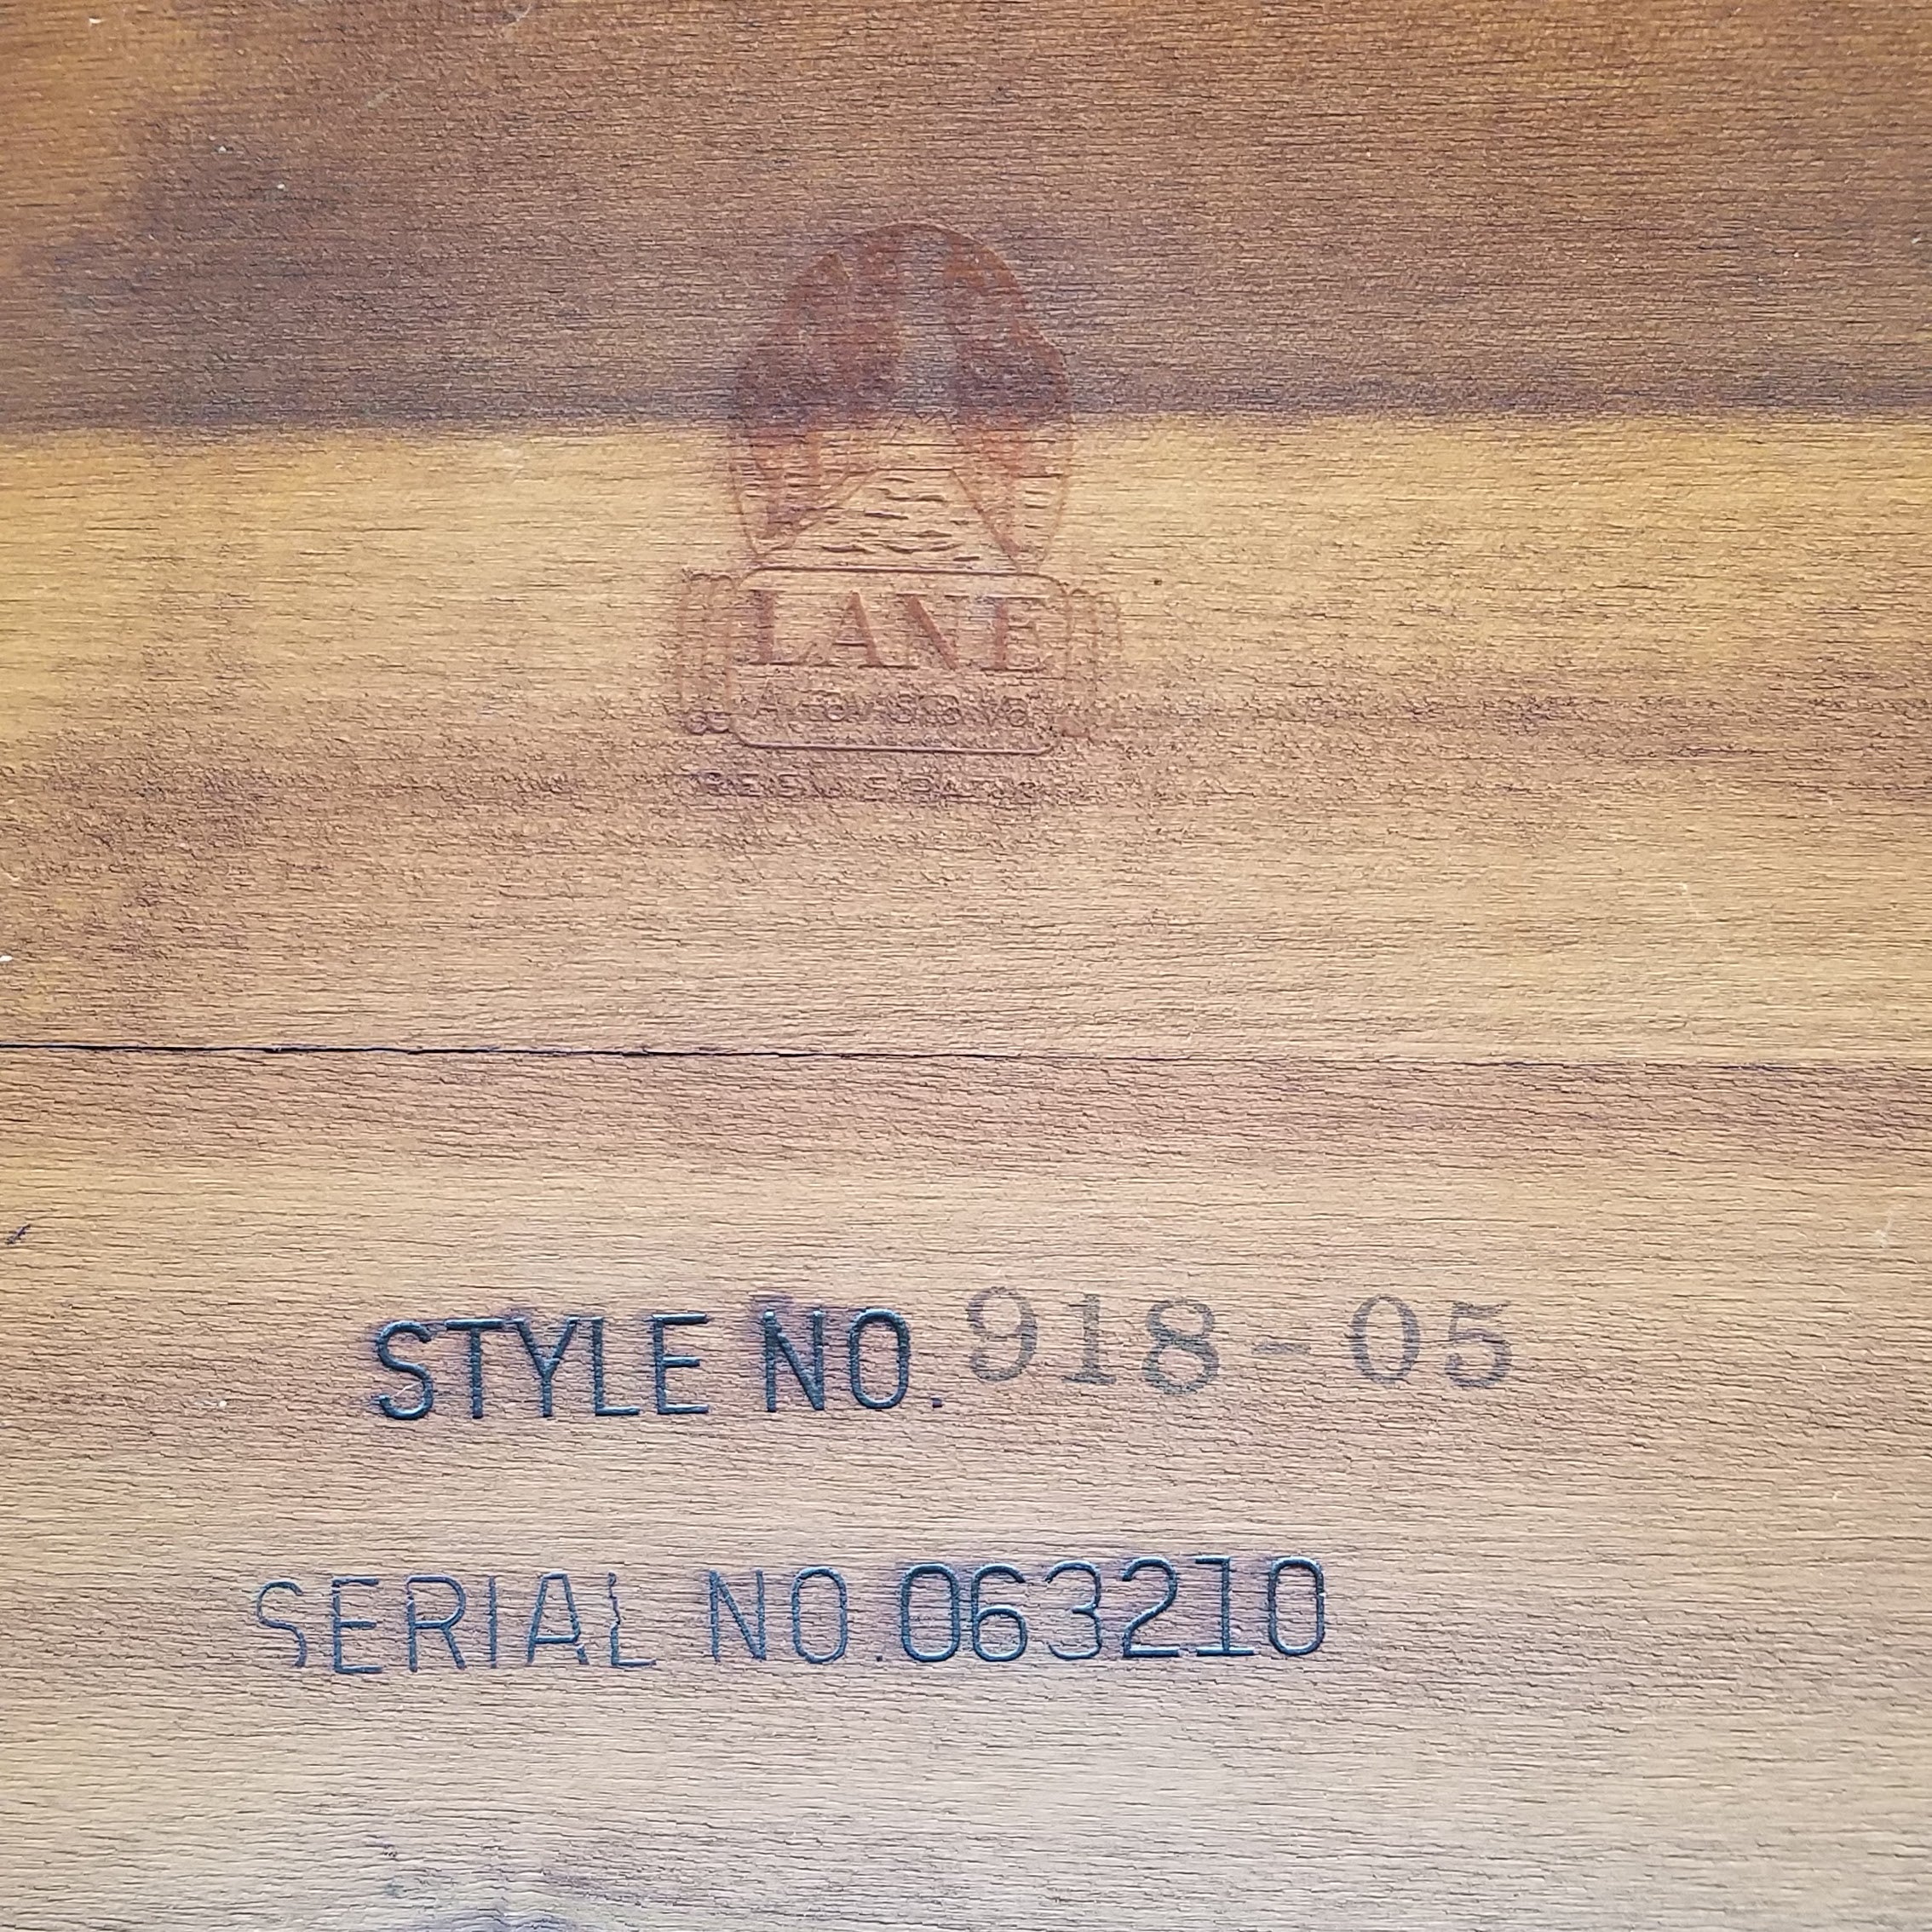 Lane Tile Inlay Side Table